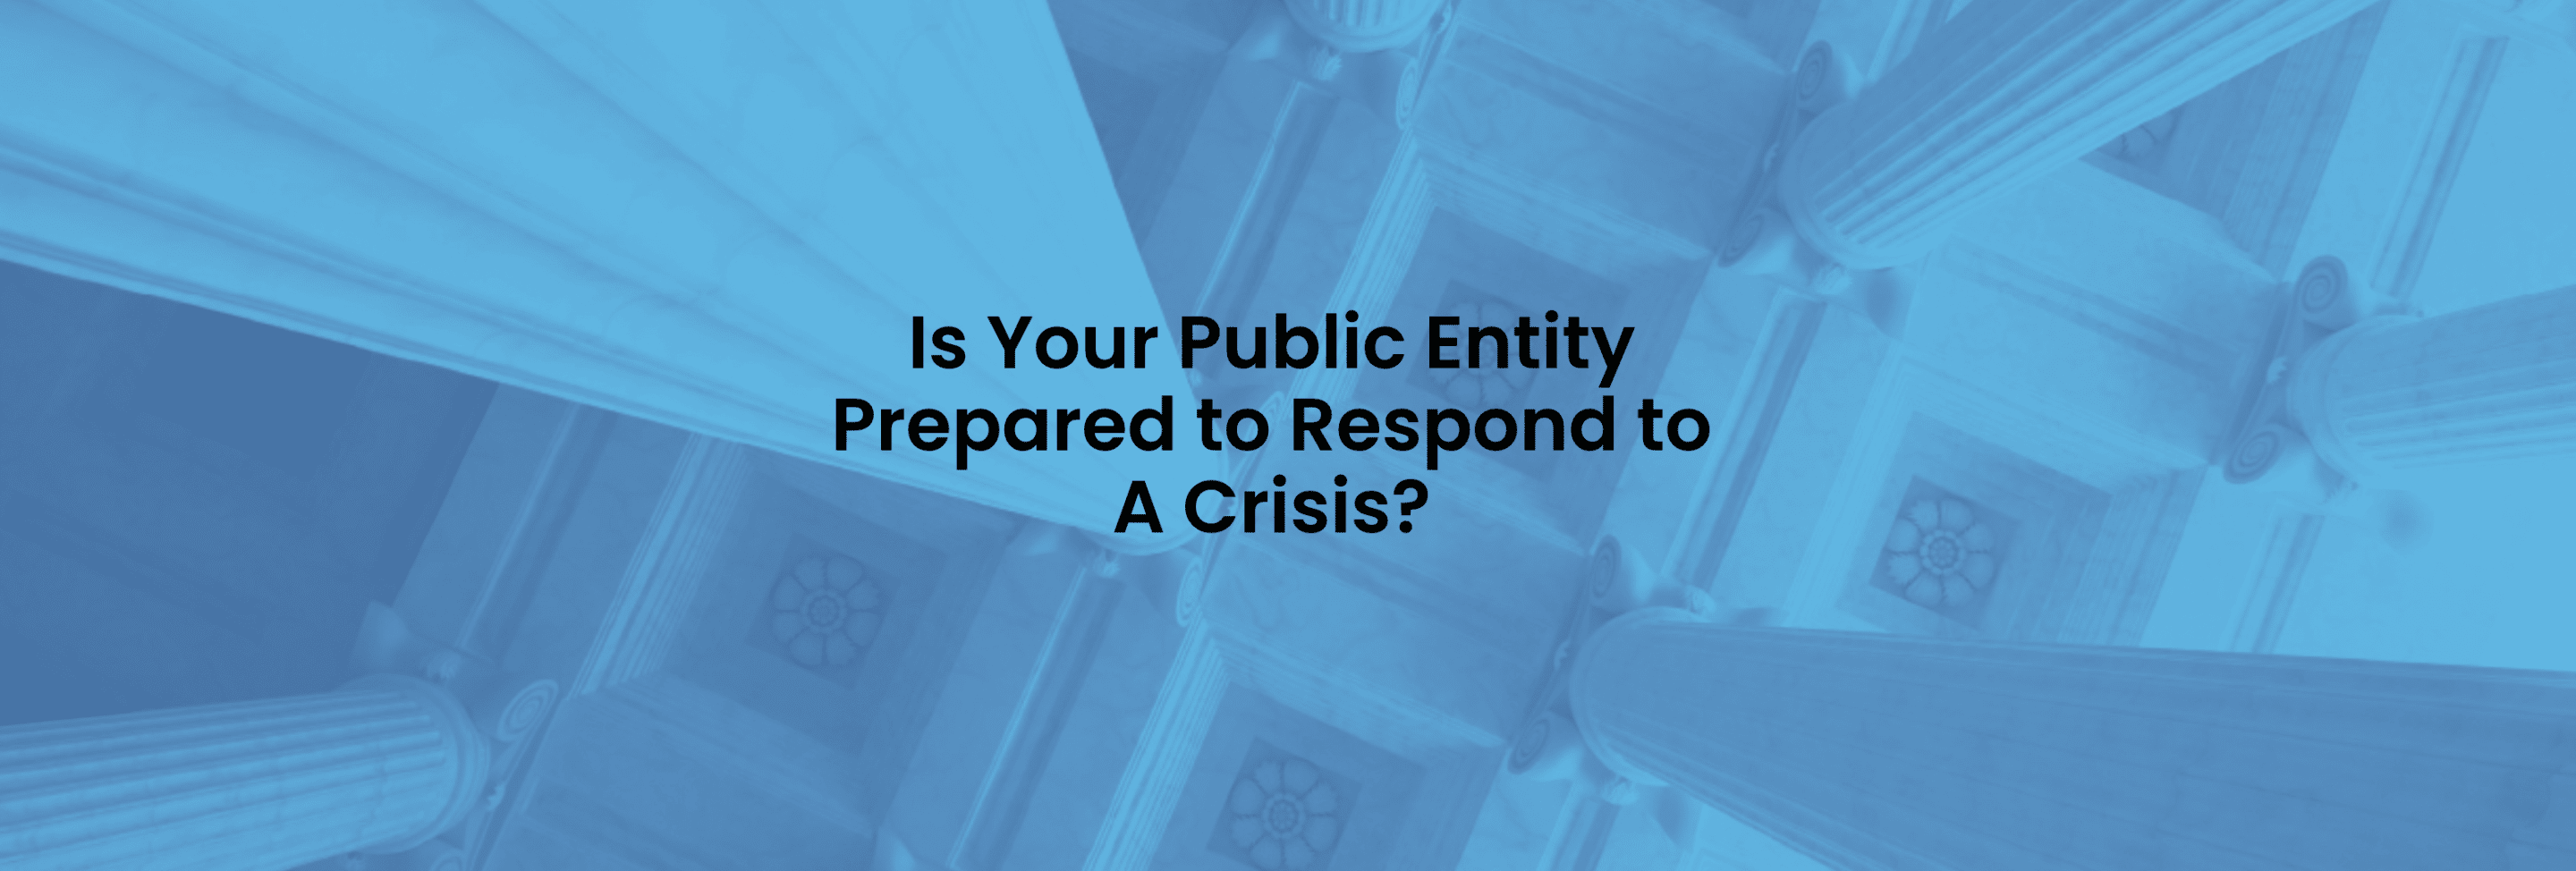 Public entity crisis response graphic